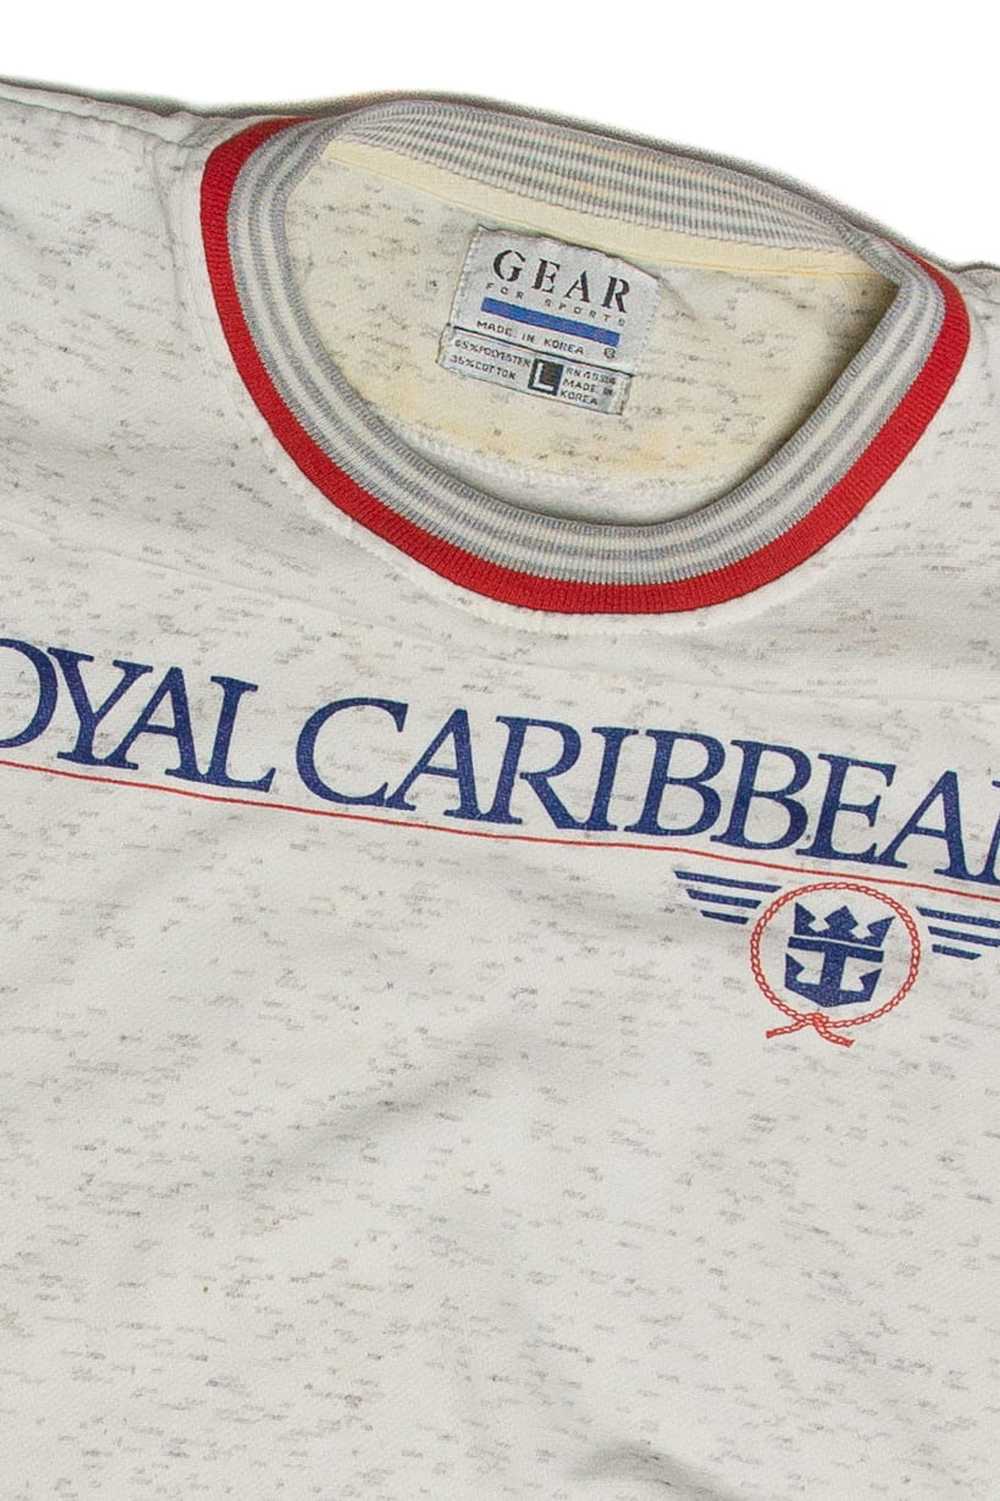 Vintage Royal Caribbean Sweatshirt - image 5